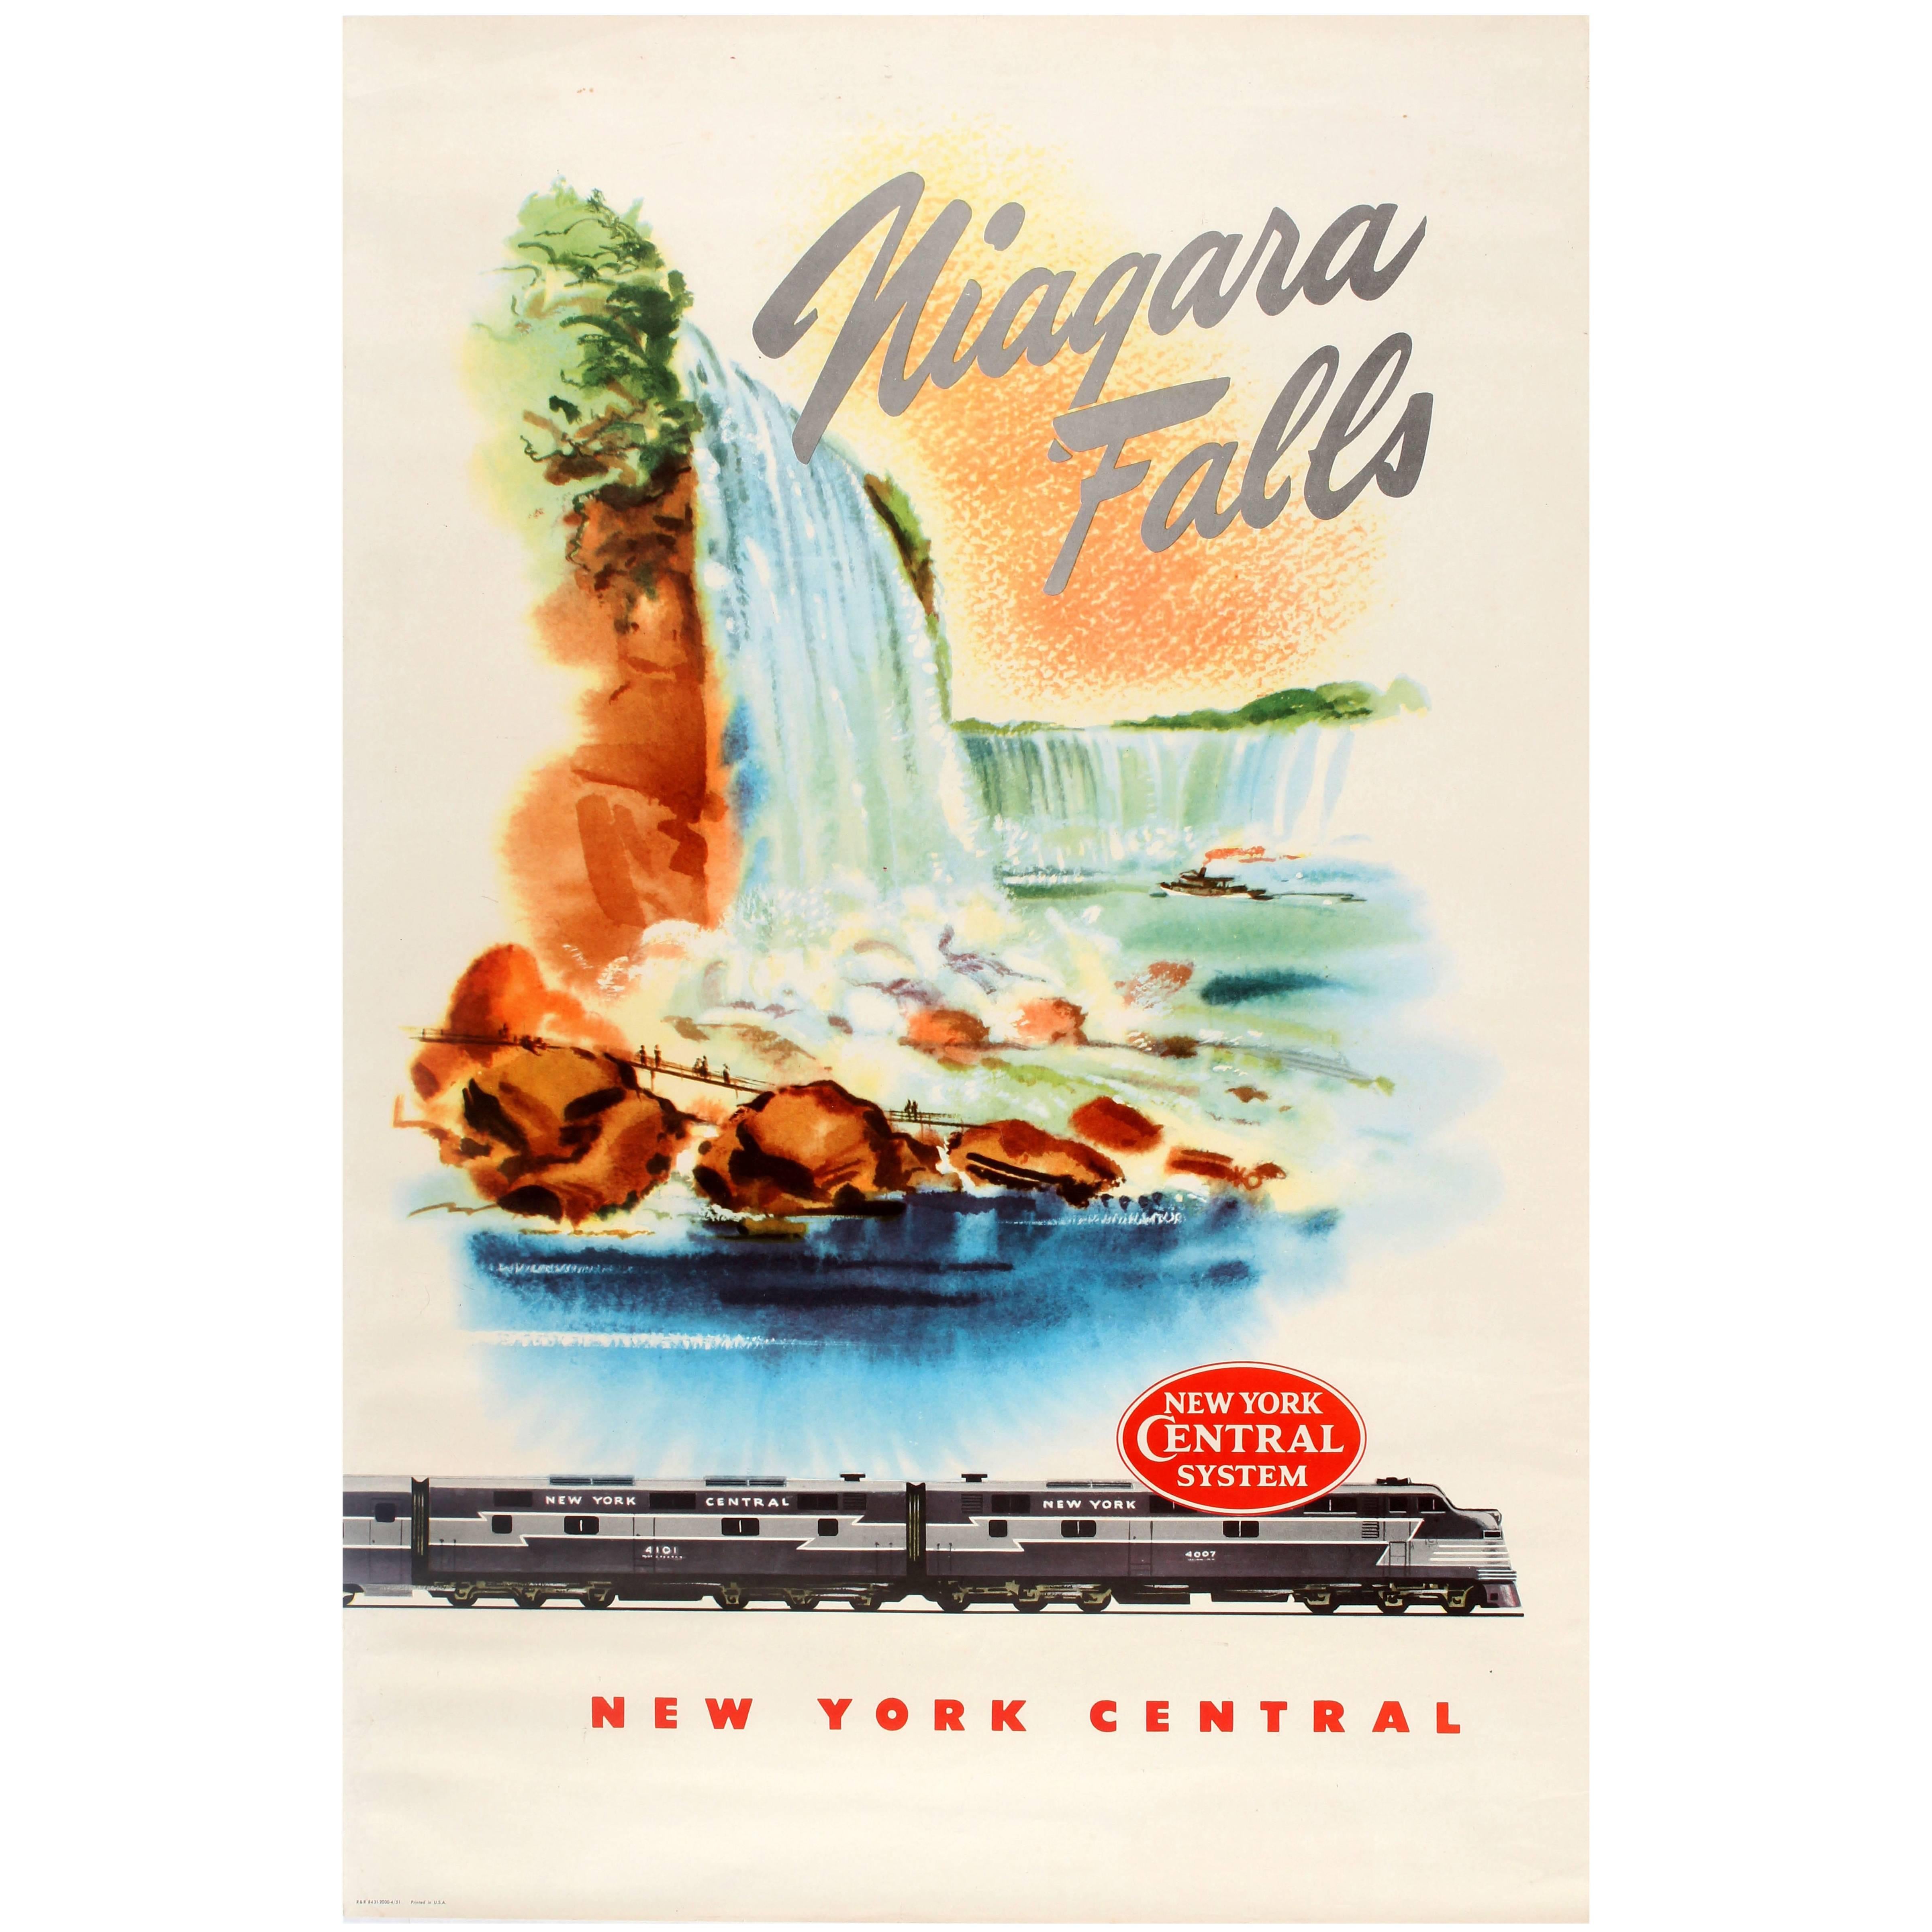 Original Vintage New York Central Railway Poster Advertising the Niagara Falls